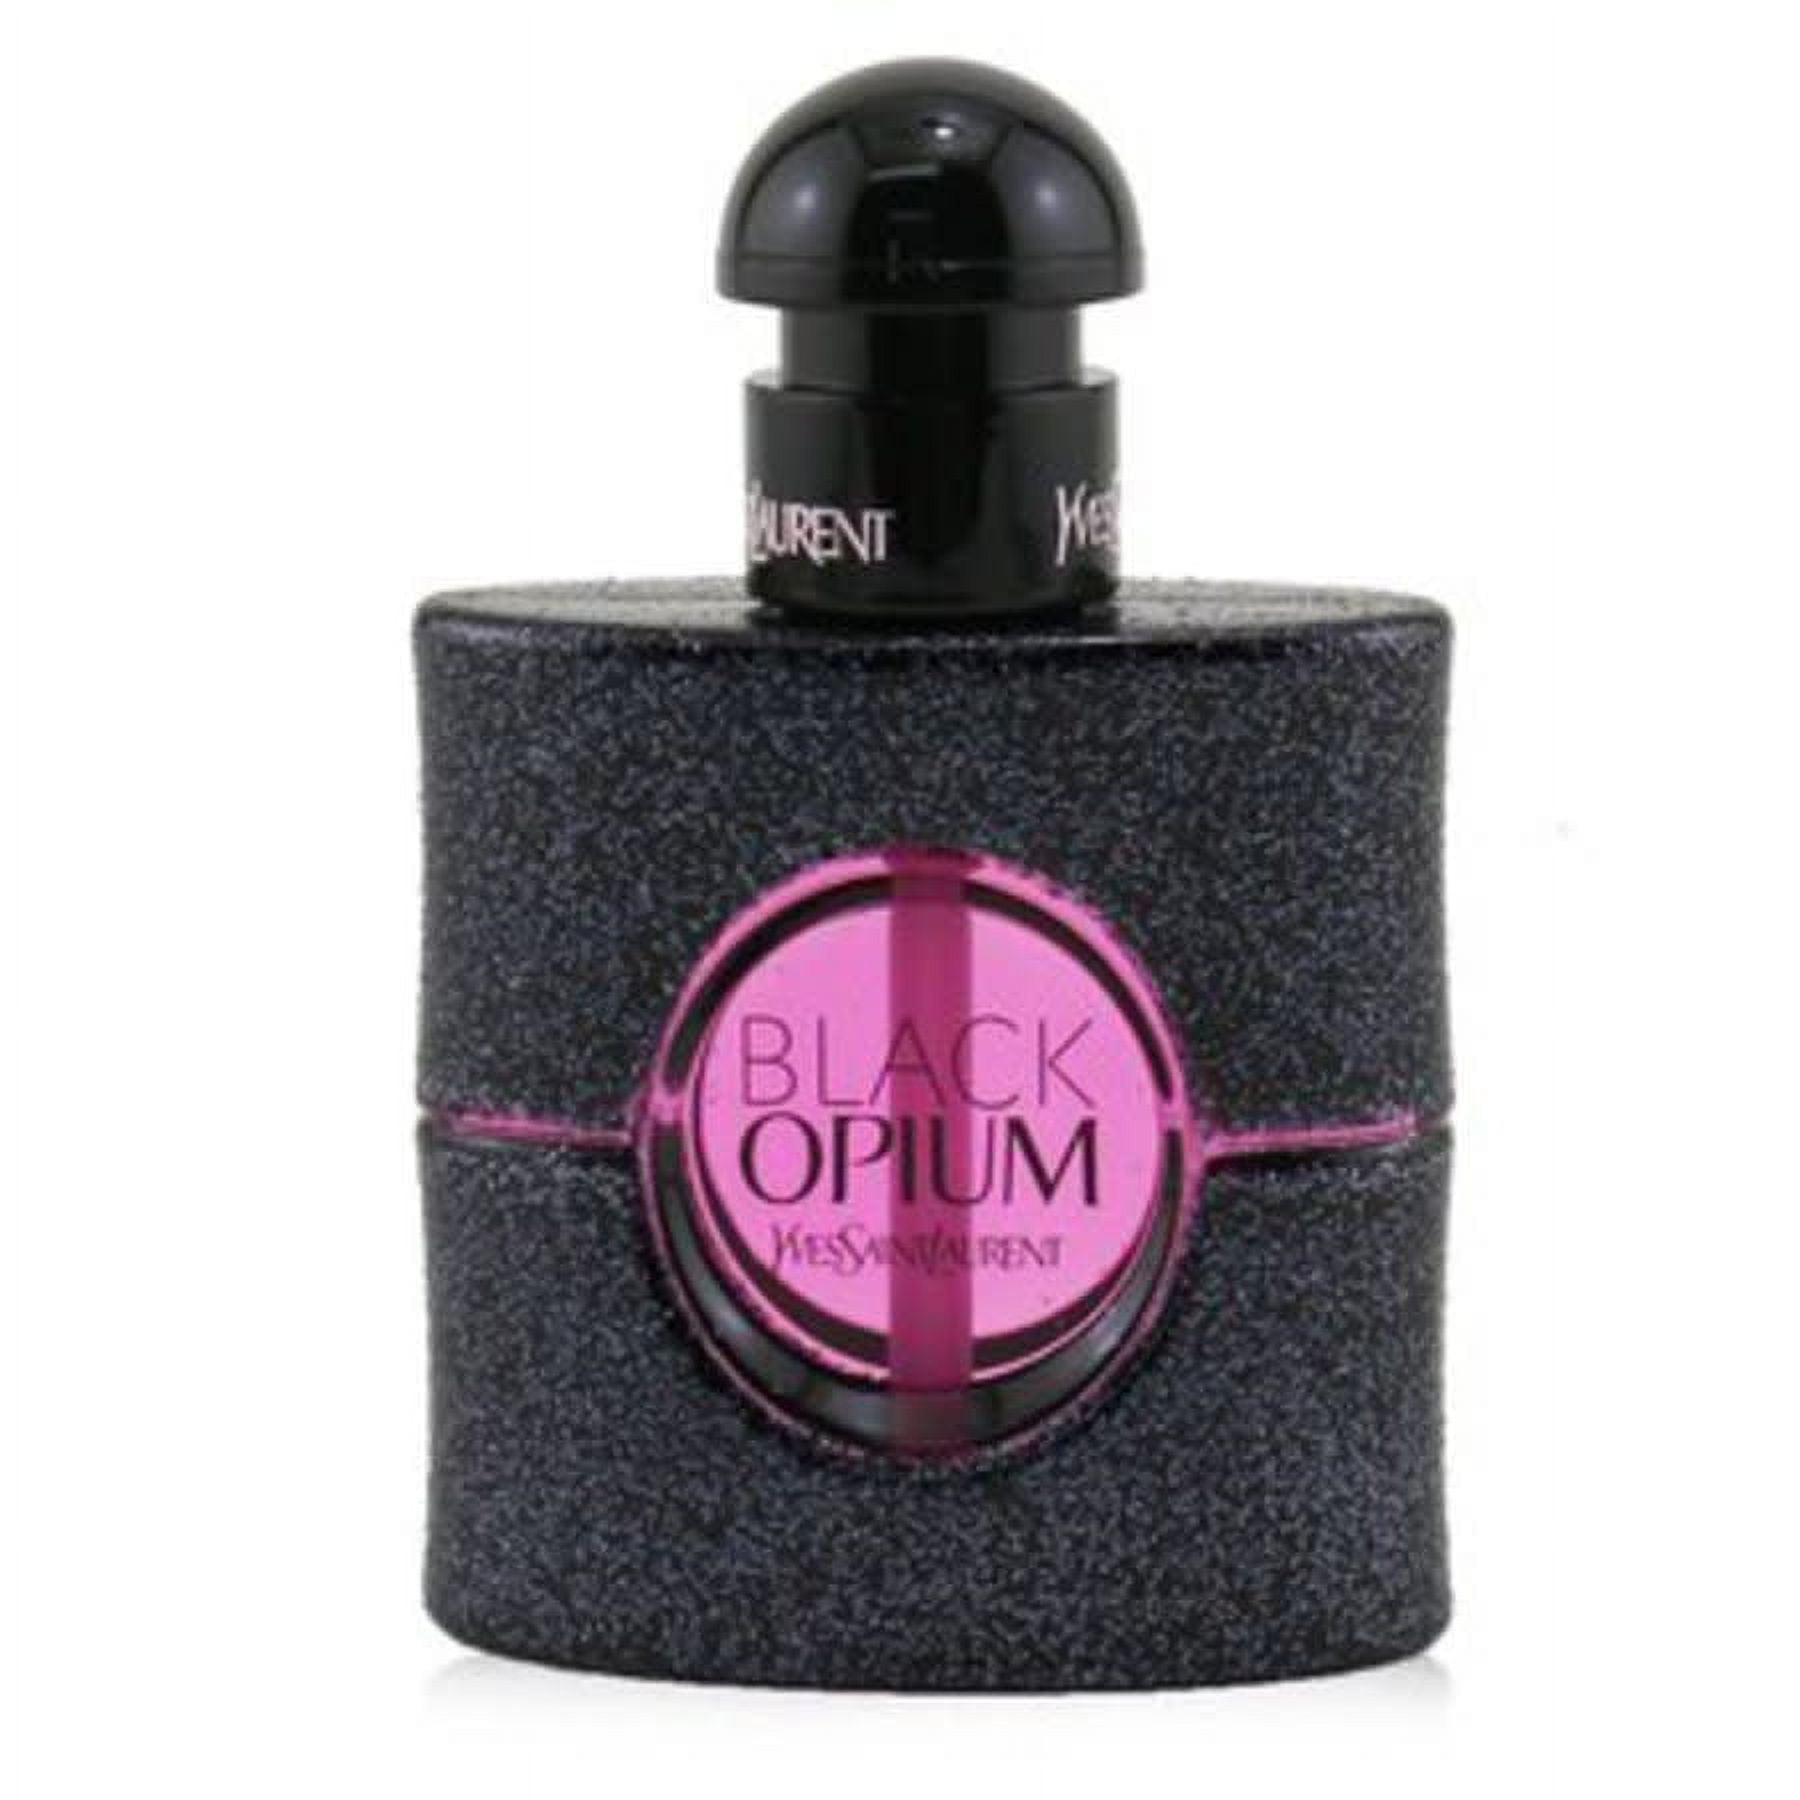 Black Opium Neon by Yves Saint Laurent Fragrance : Perfume Review 